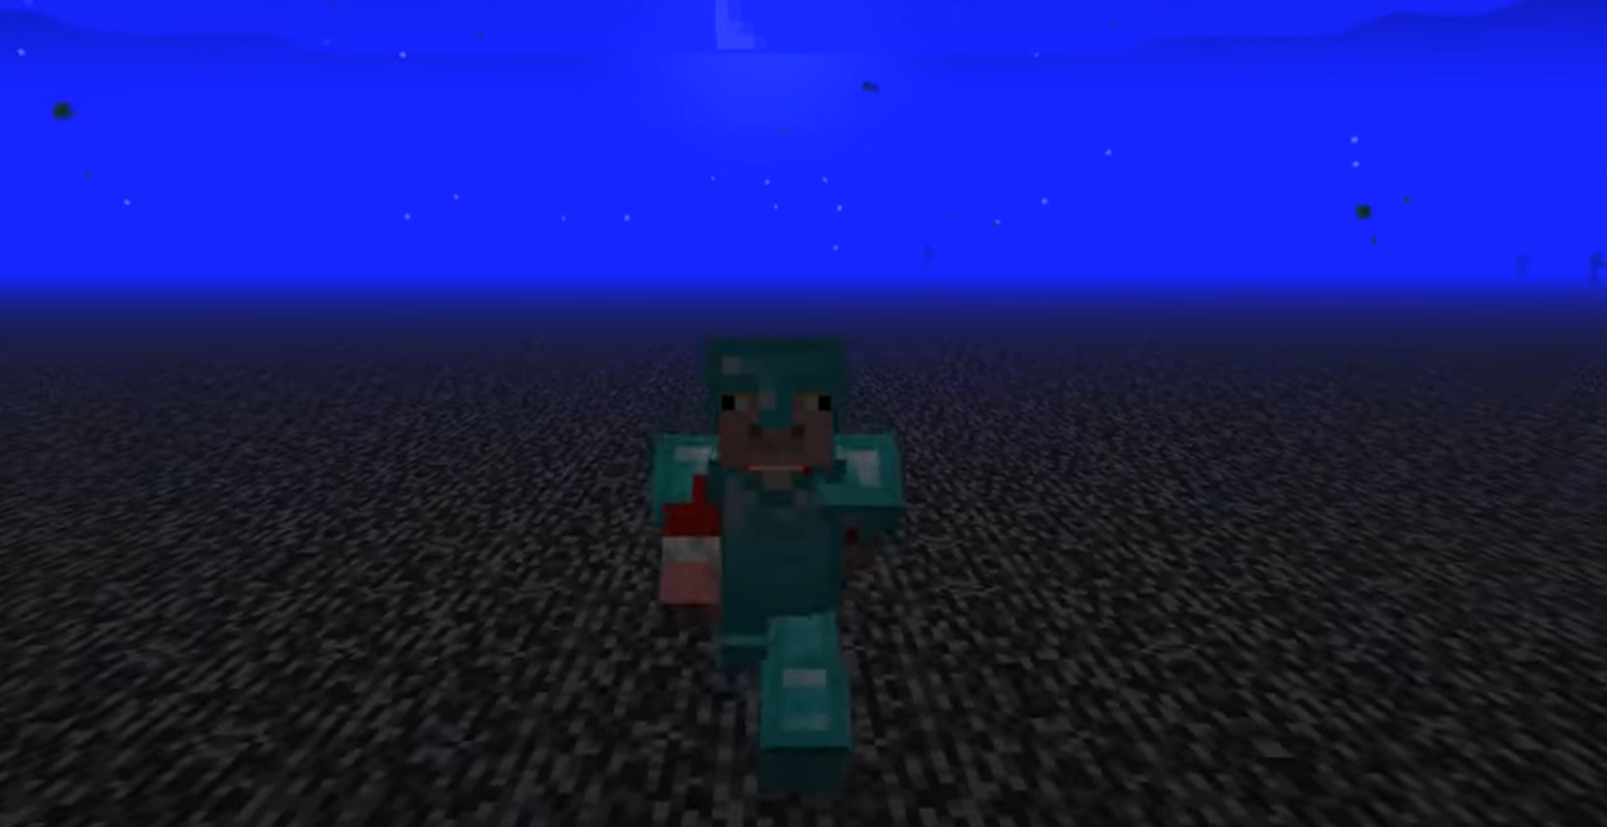 KREA - minecraft screenshot of two players fighting with diamond gear